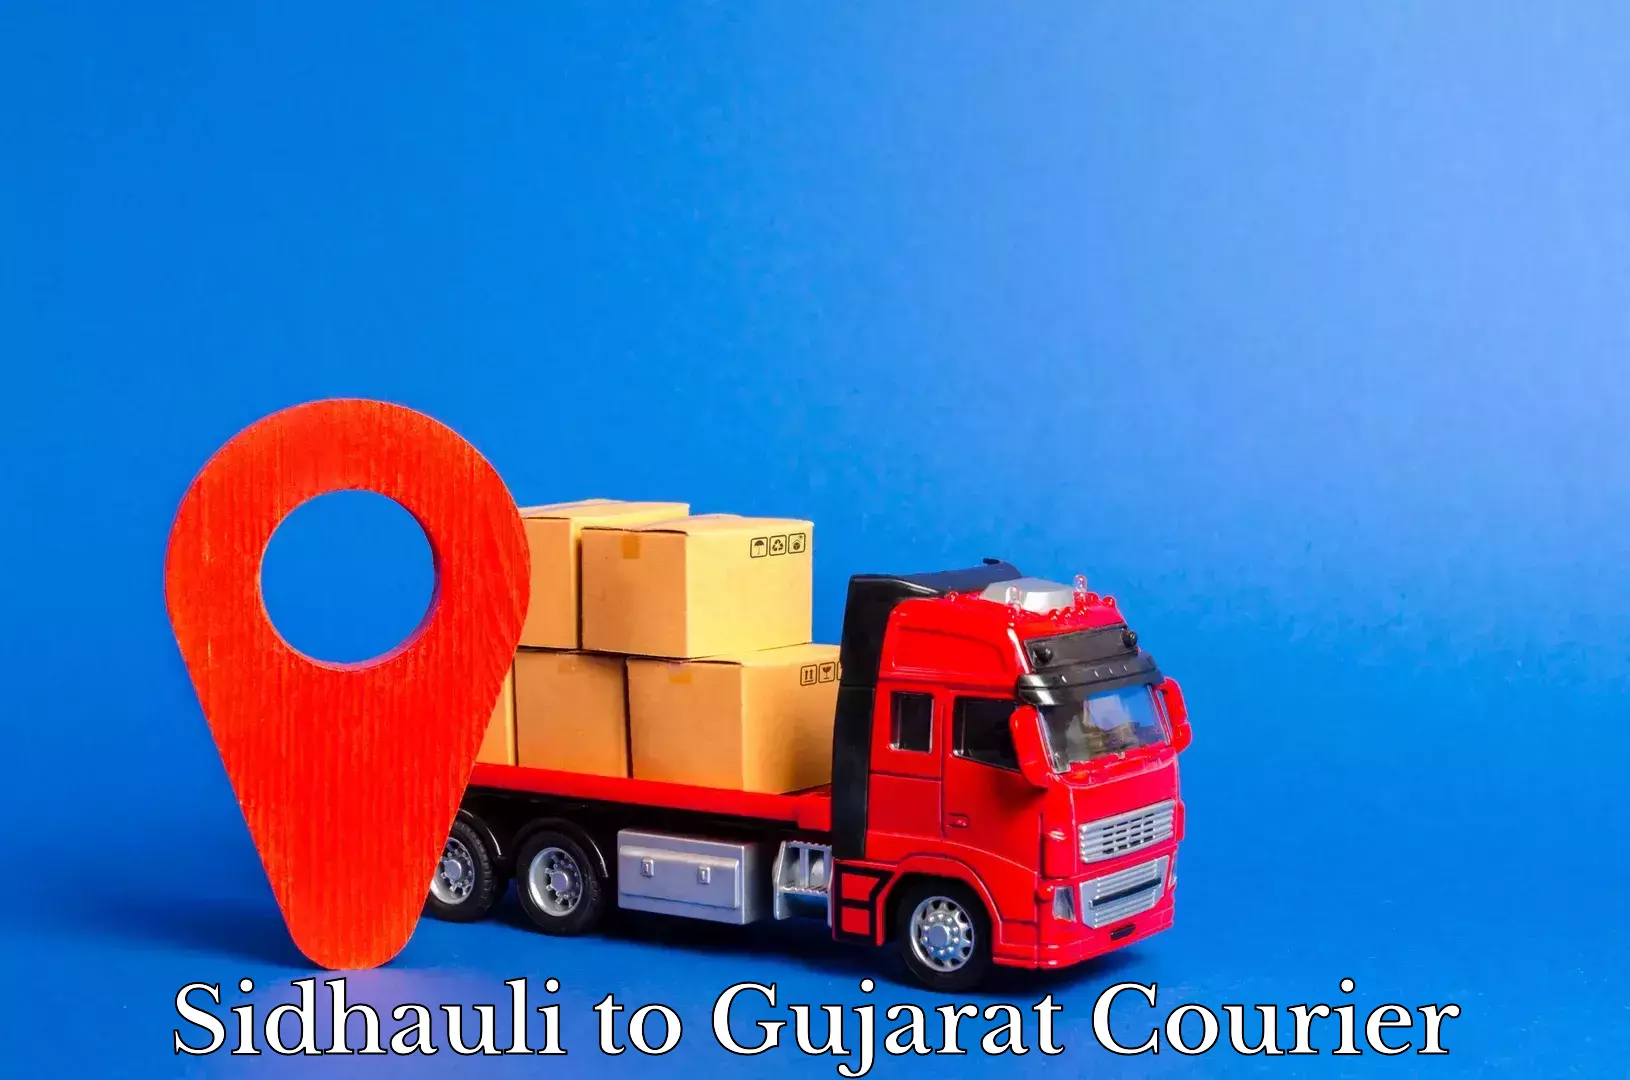 Courier service comparison Sidhauli to Gujarat